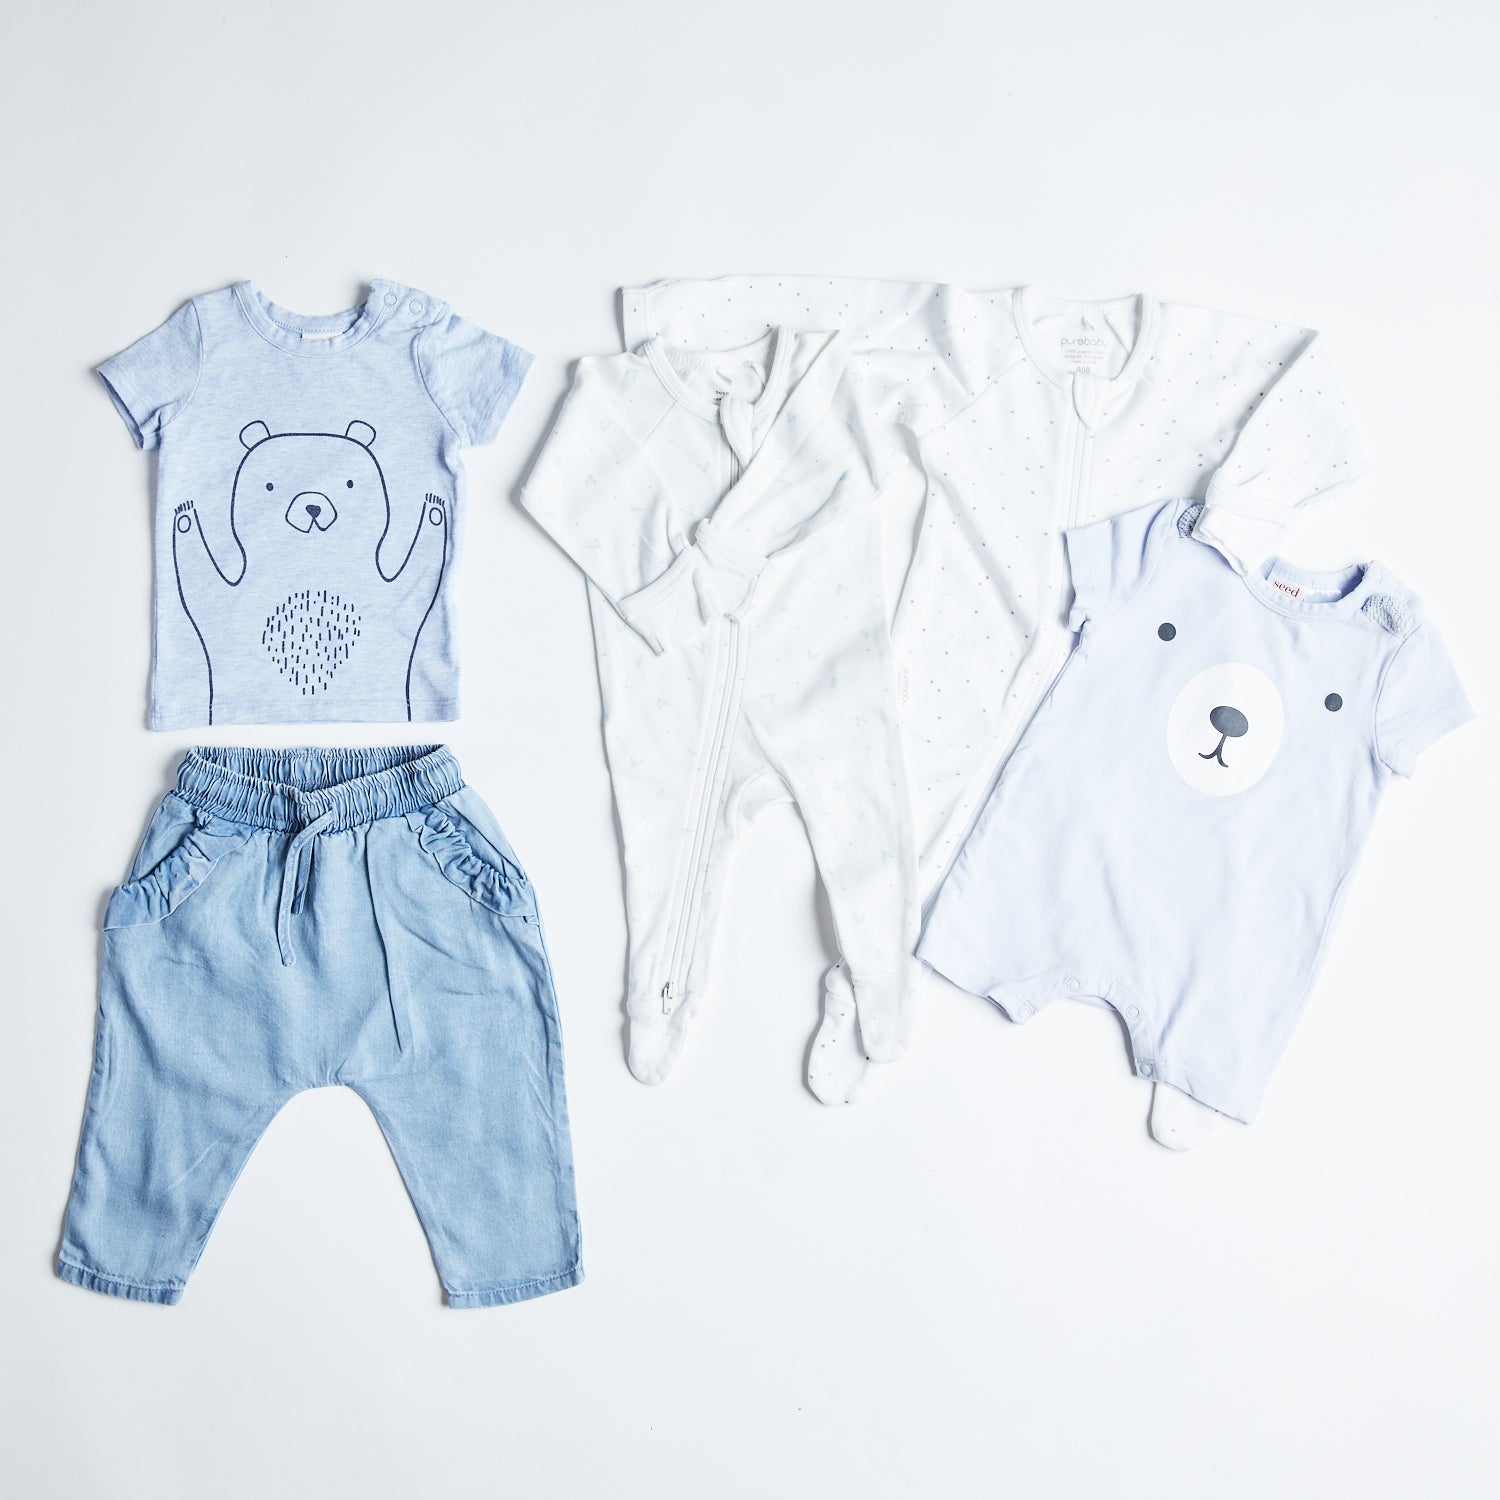 Kids Clothing - Kids Tops, Pants & more - Purebaby - Purebaby